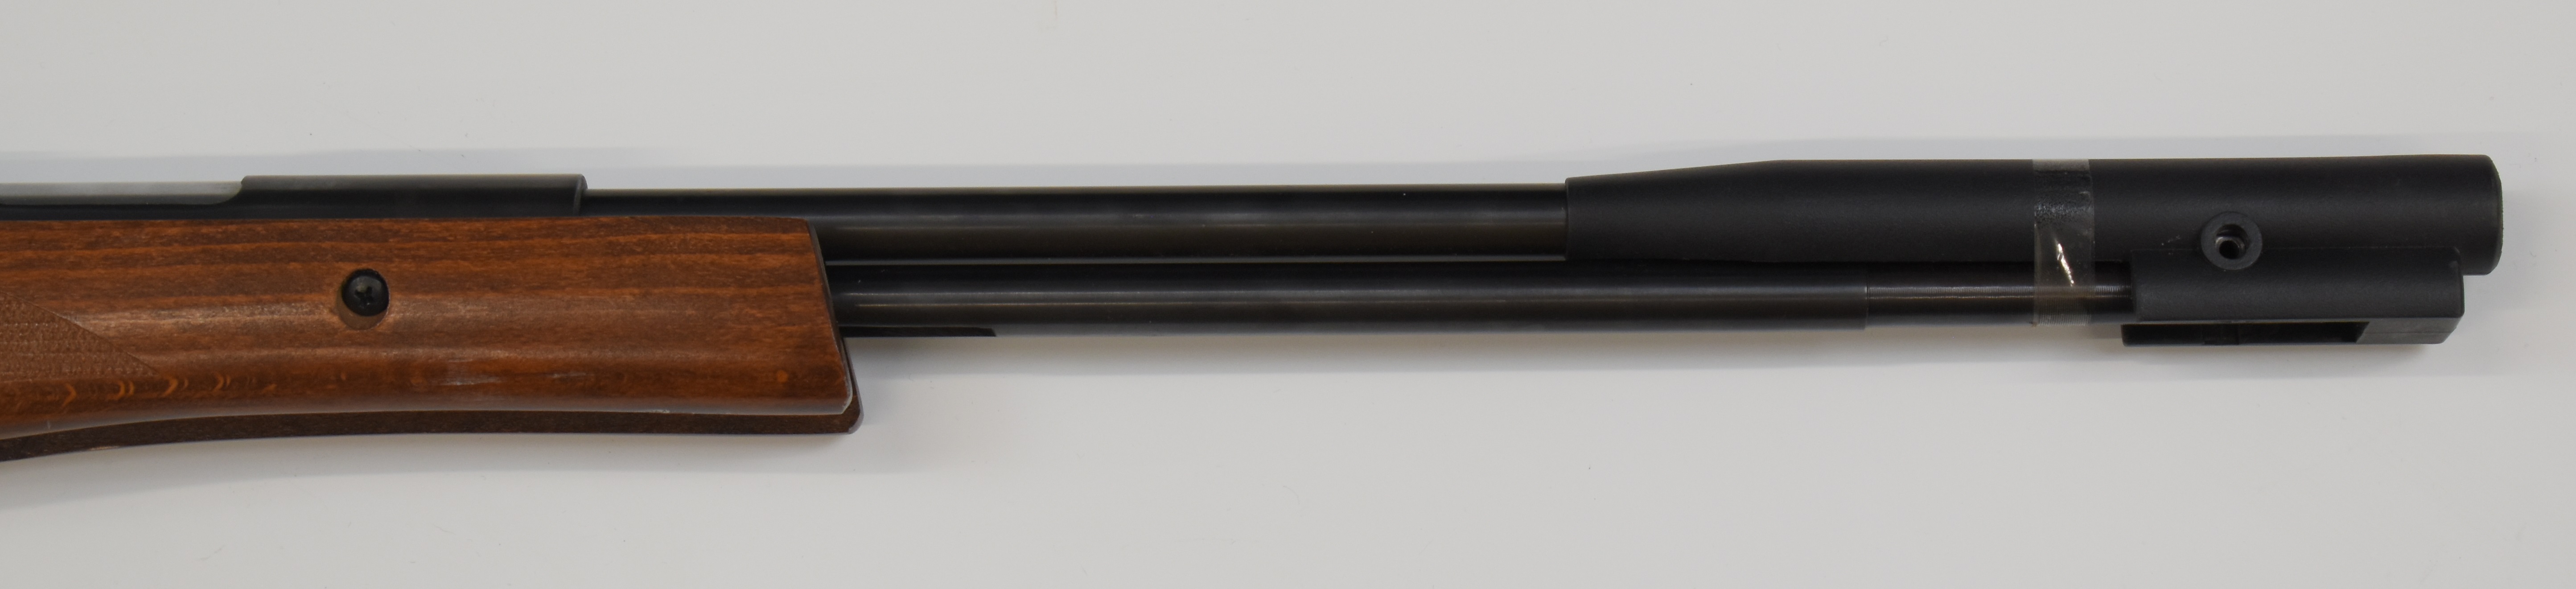 Remington Warhawk .177 under-lever air rifle with textured semi-pistol grip, raised cheek piece - Image 5 of 10